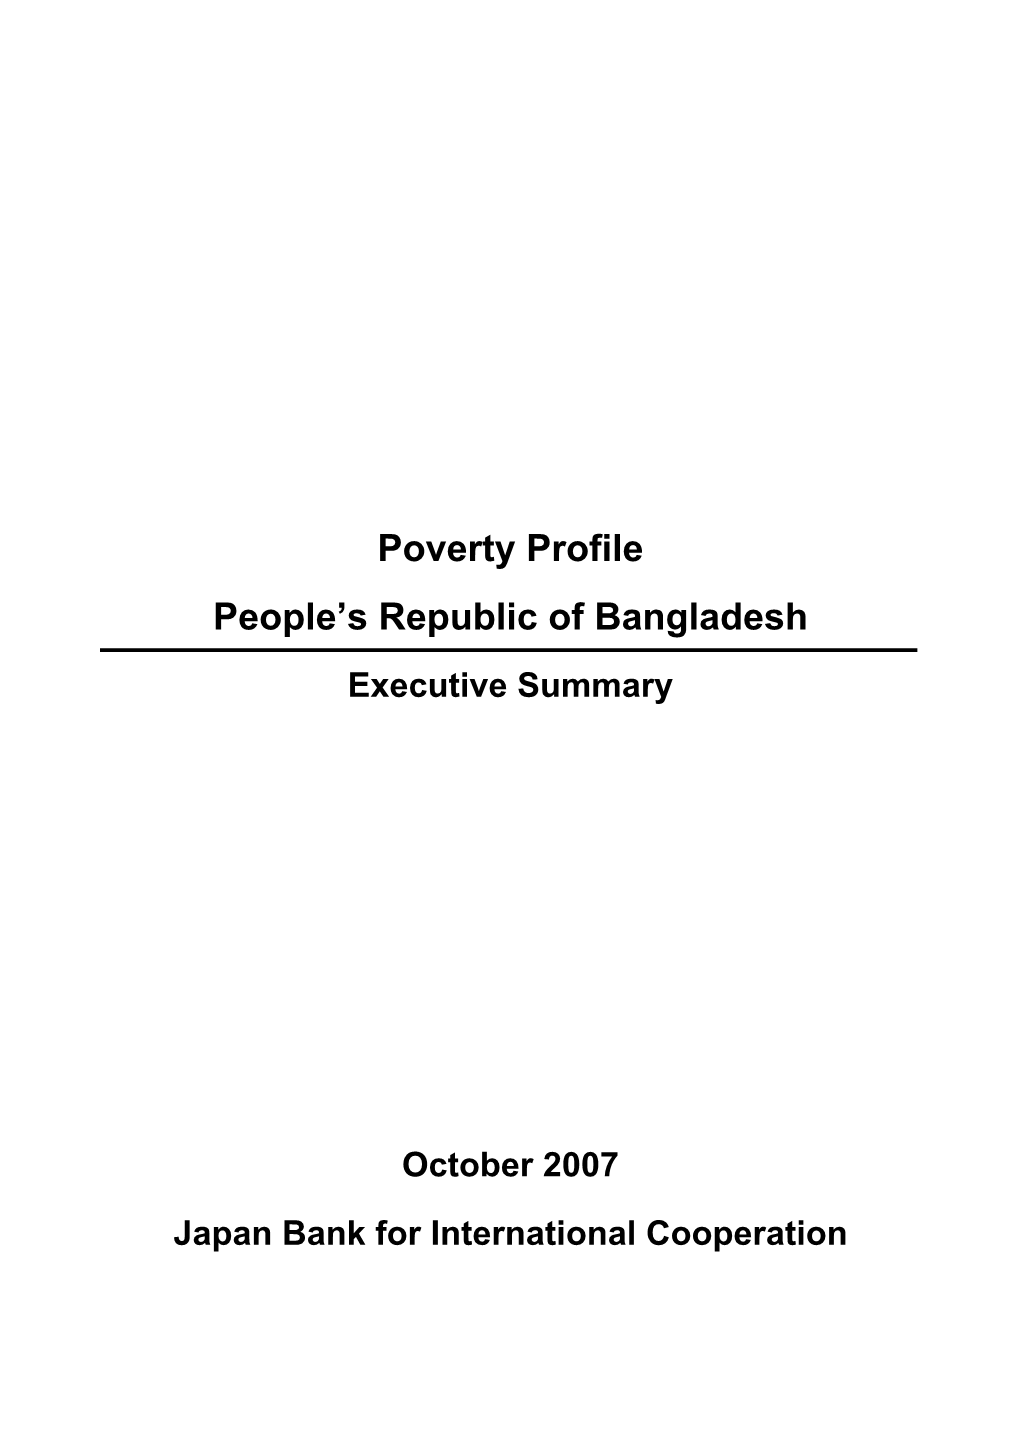 Poverty Profile People's Republic of Bangladesh